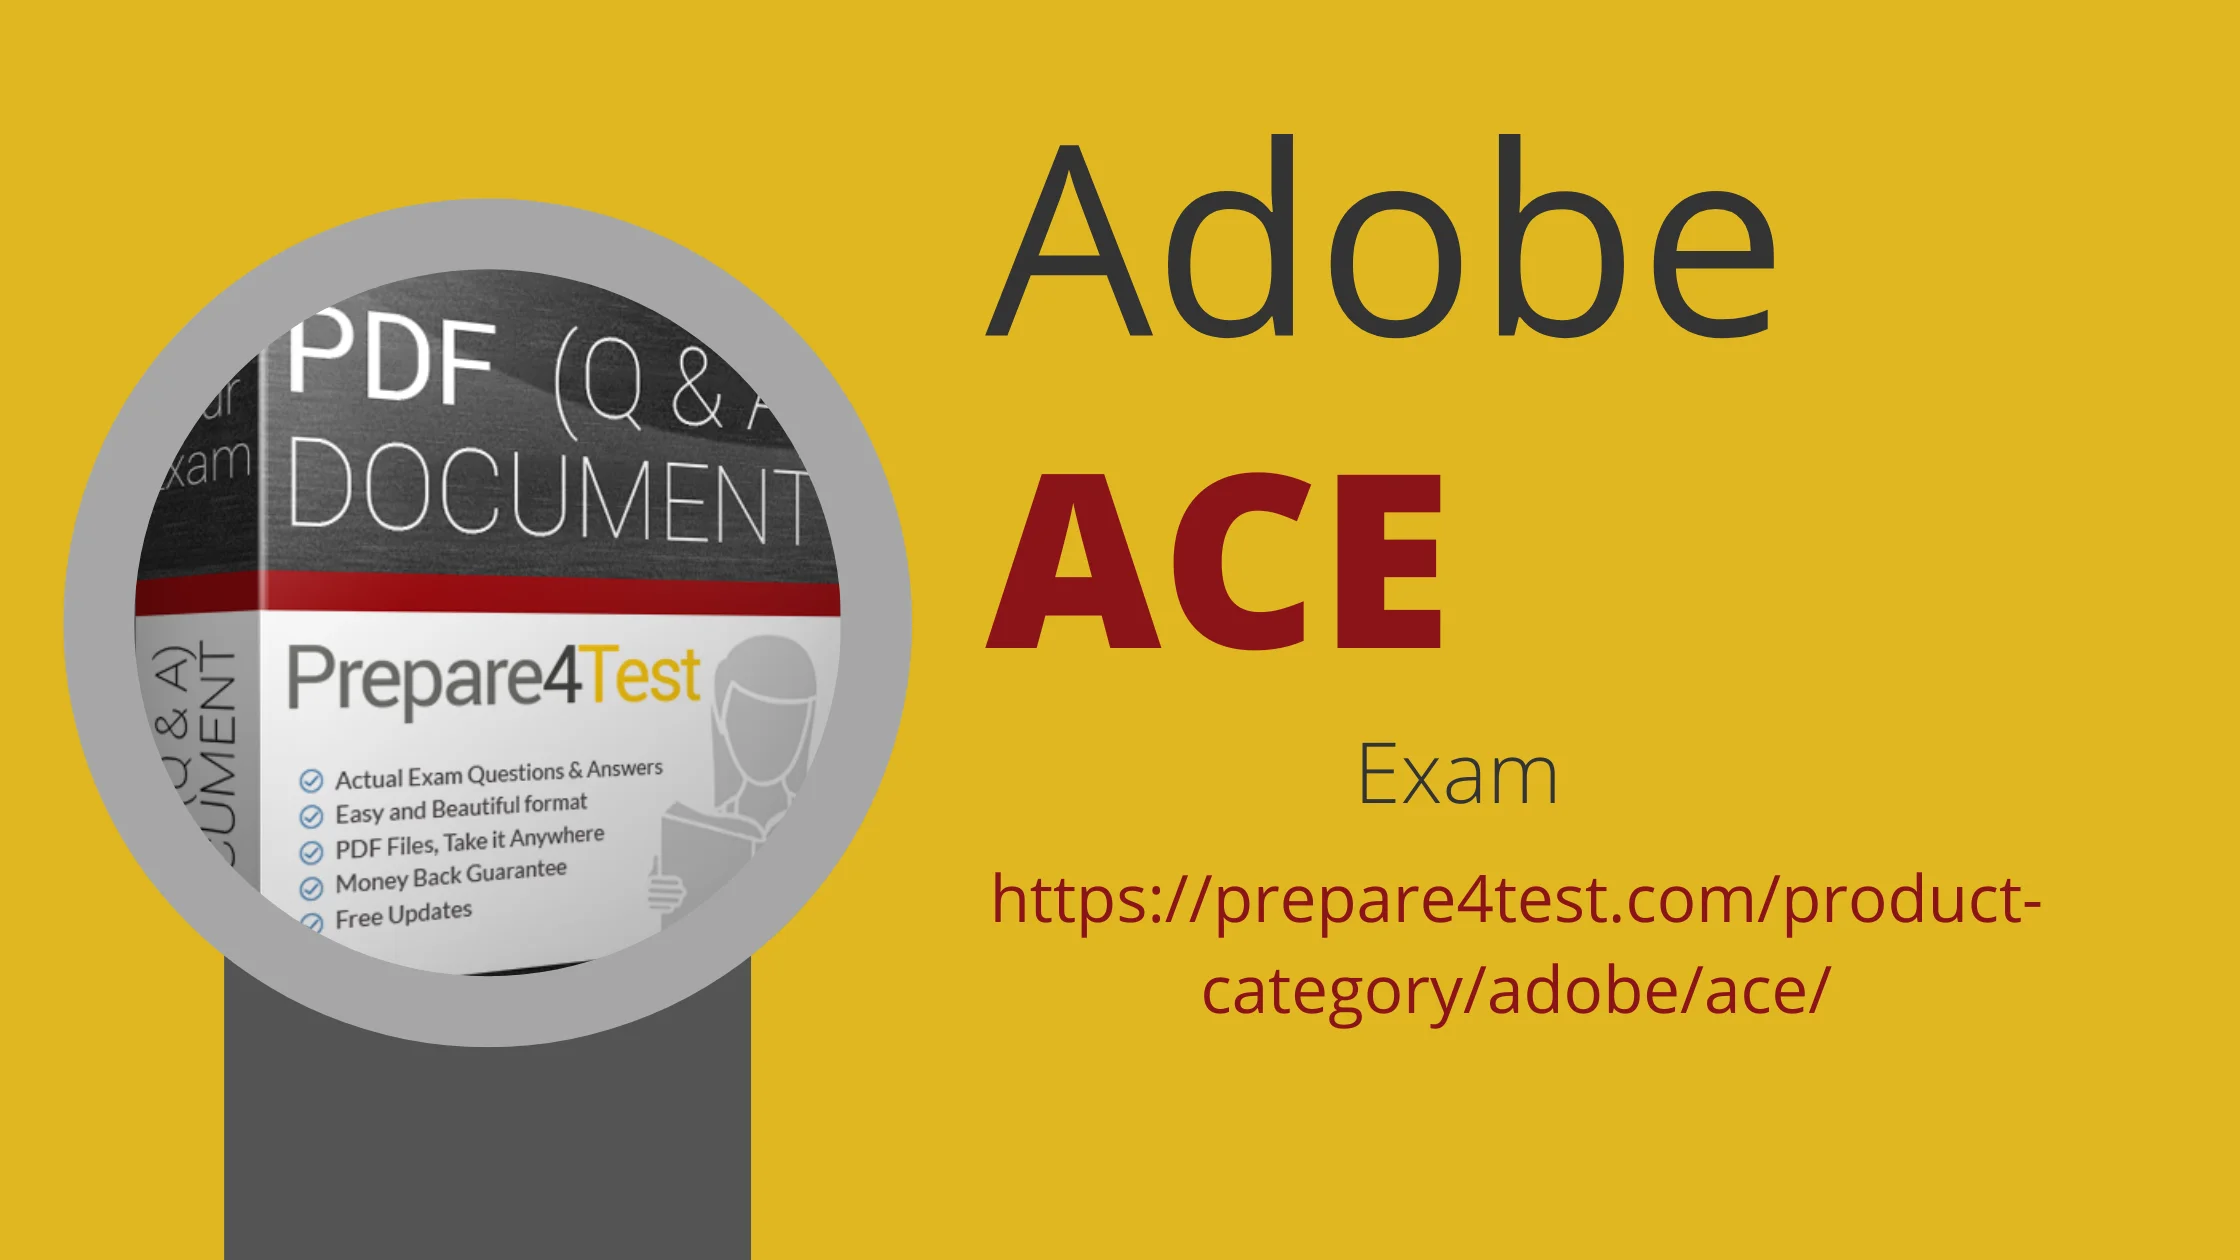 Adobe ACE Exam